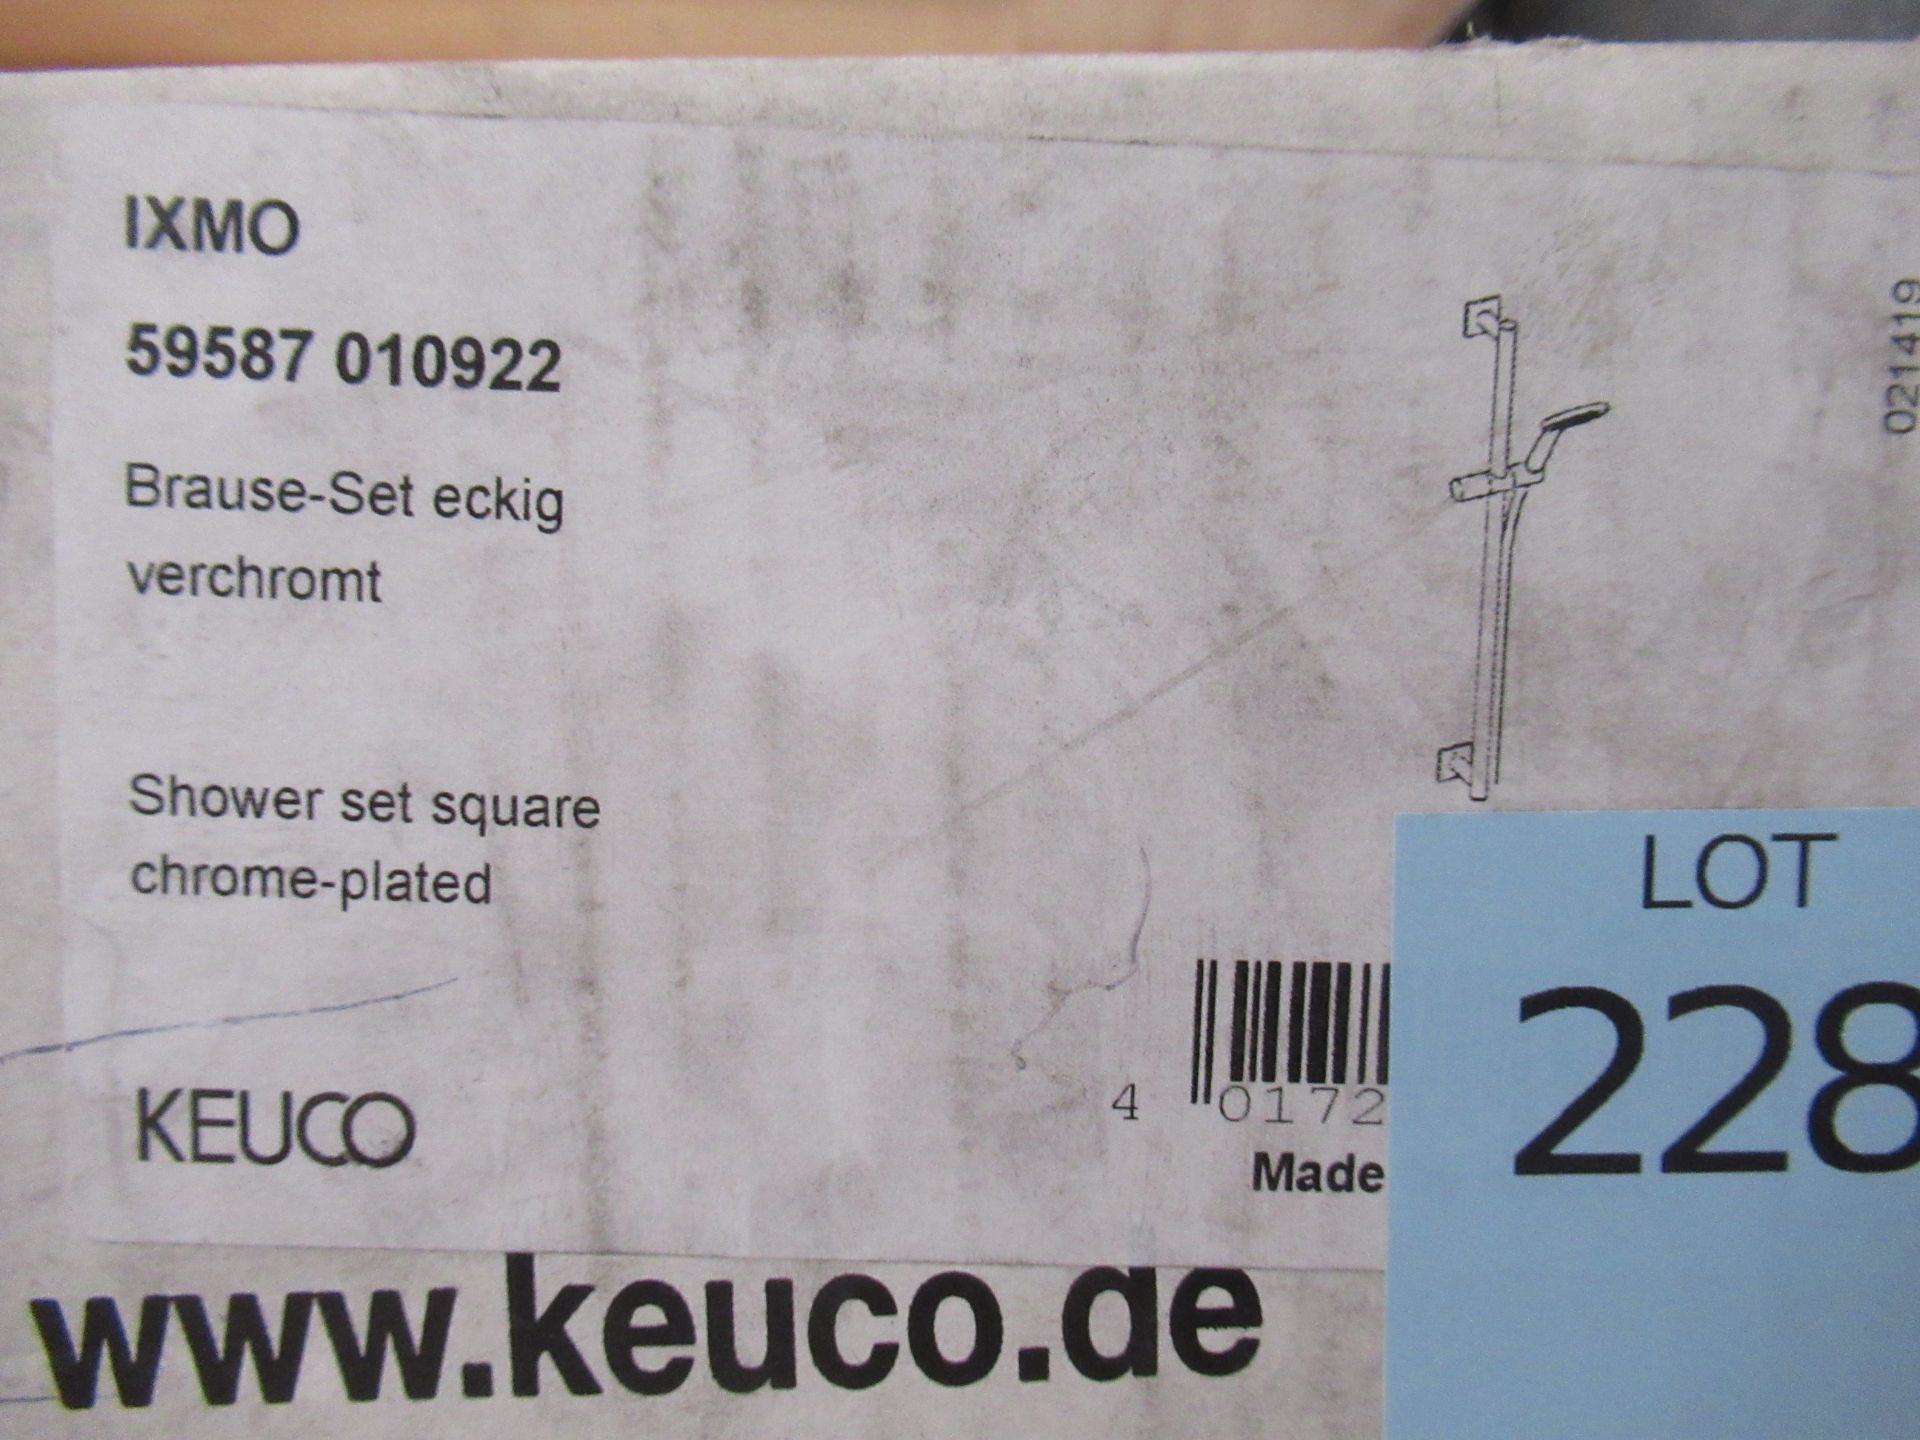 A Keuco IXMO Shower Set Square Chrome Plated, P/N 59587-010922 - Image 2 of 2